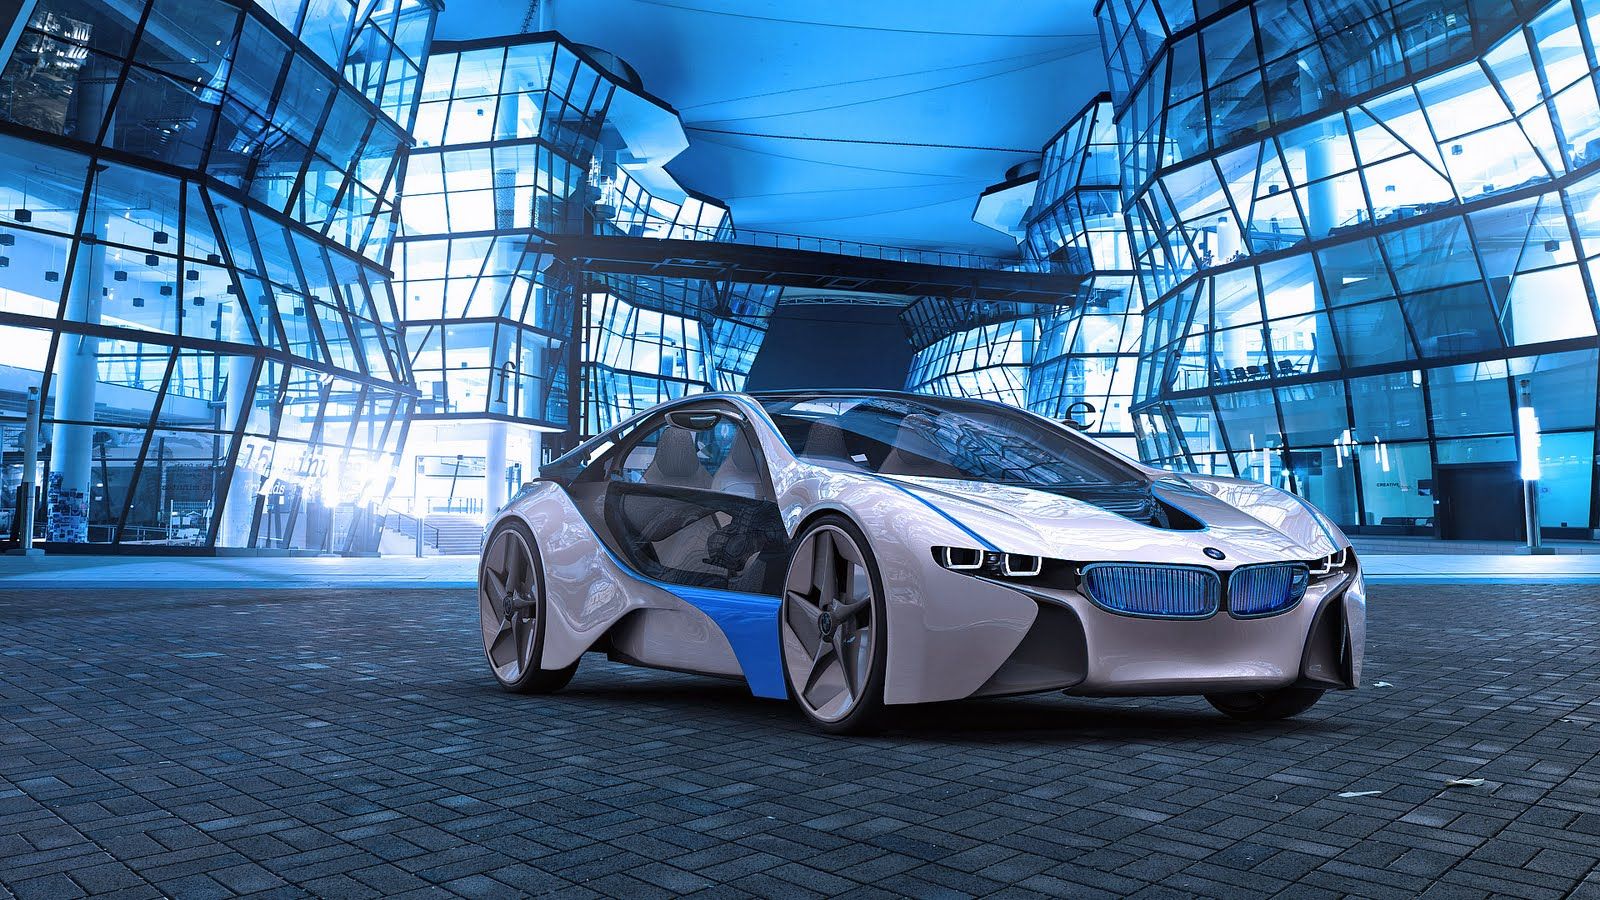 BMW Vision Future Hybrid Architecture HD Wallpaper. Epic Desktop Background. Supercars wallpaper, Bmw, Sports car wallpaper